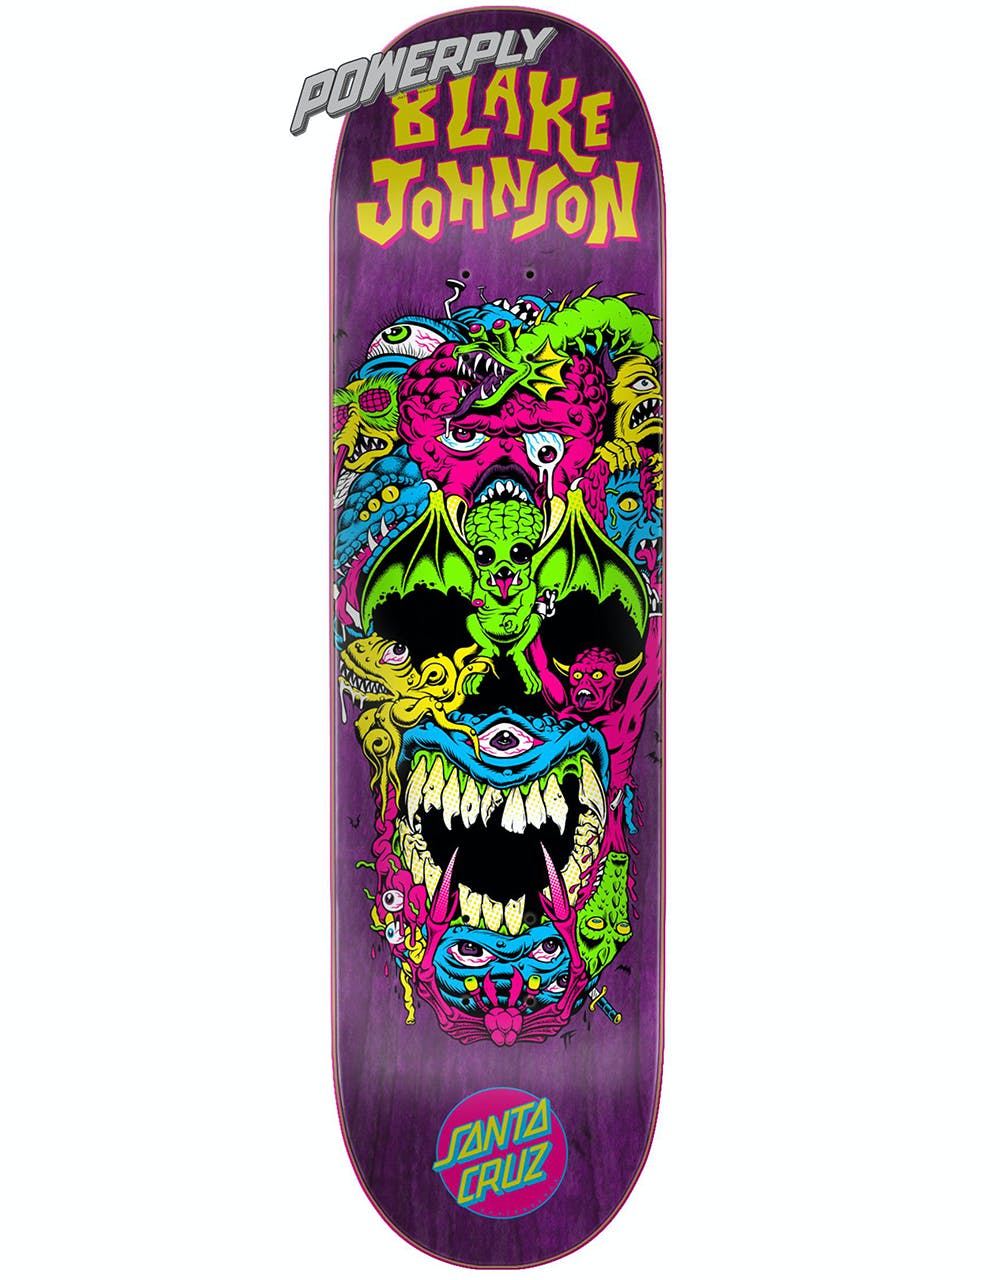 Santa Cruz Johnson Rad Skull Powerply Skateboard Deck - 8.375"